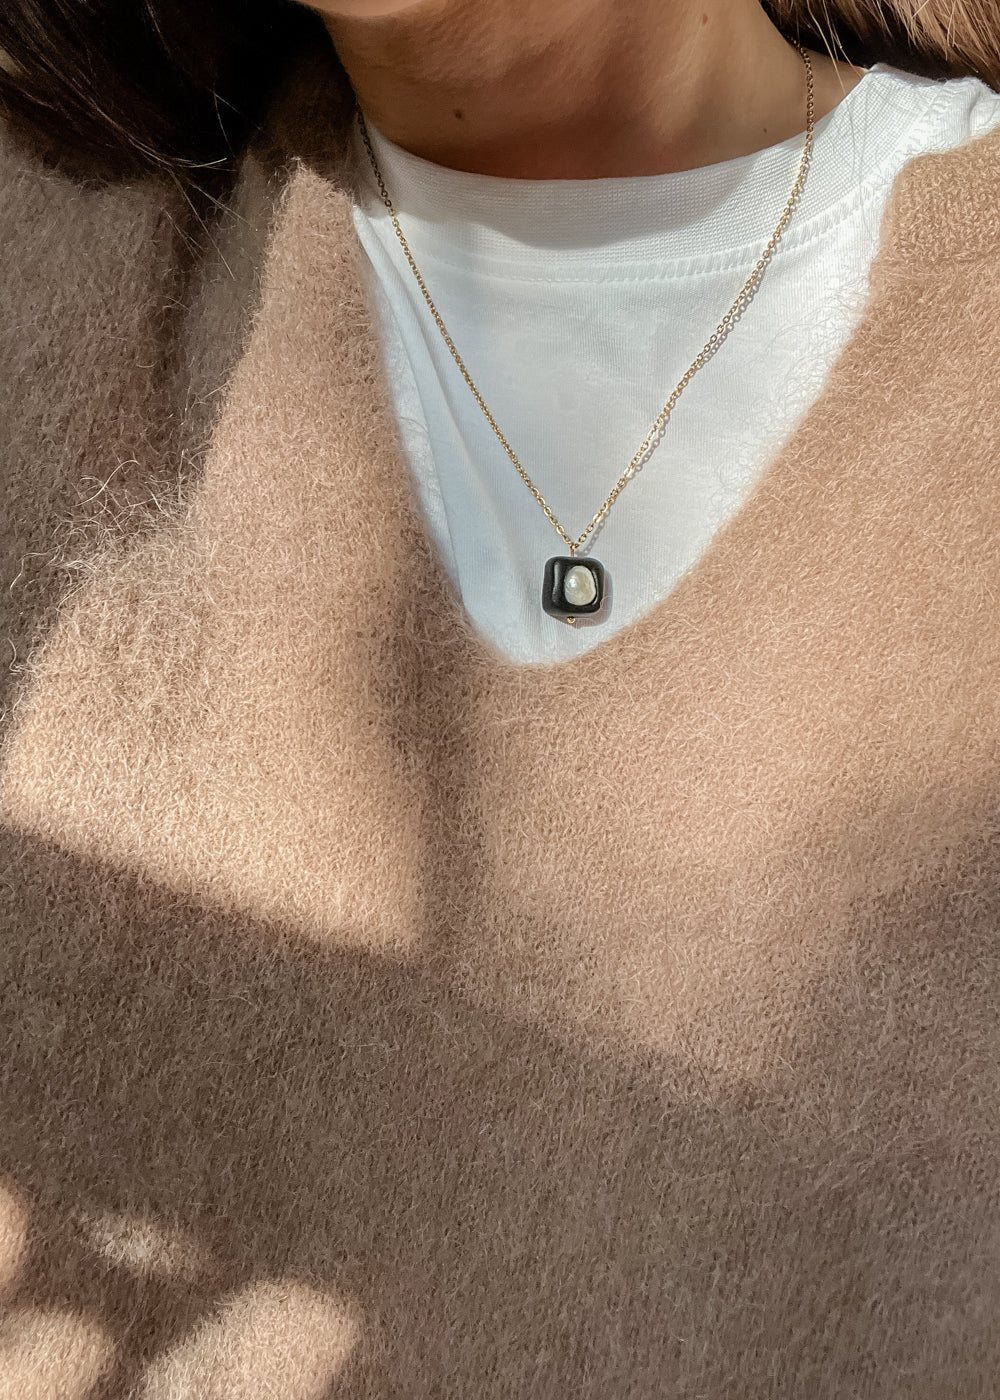 River pearl chain necklace | Black